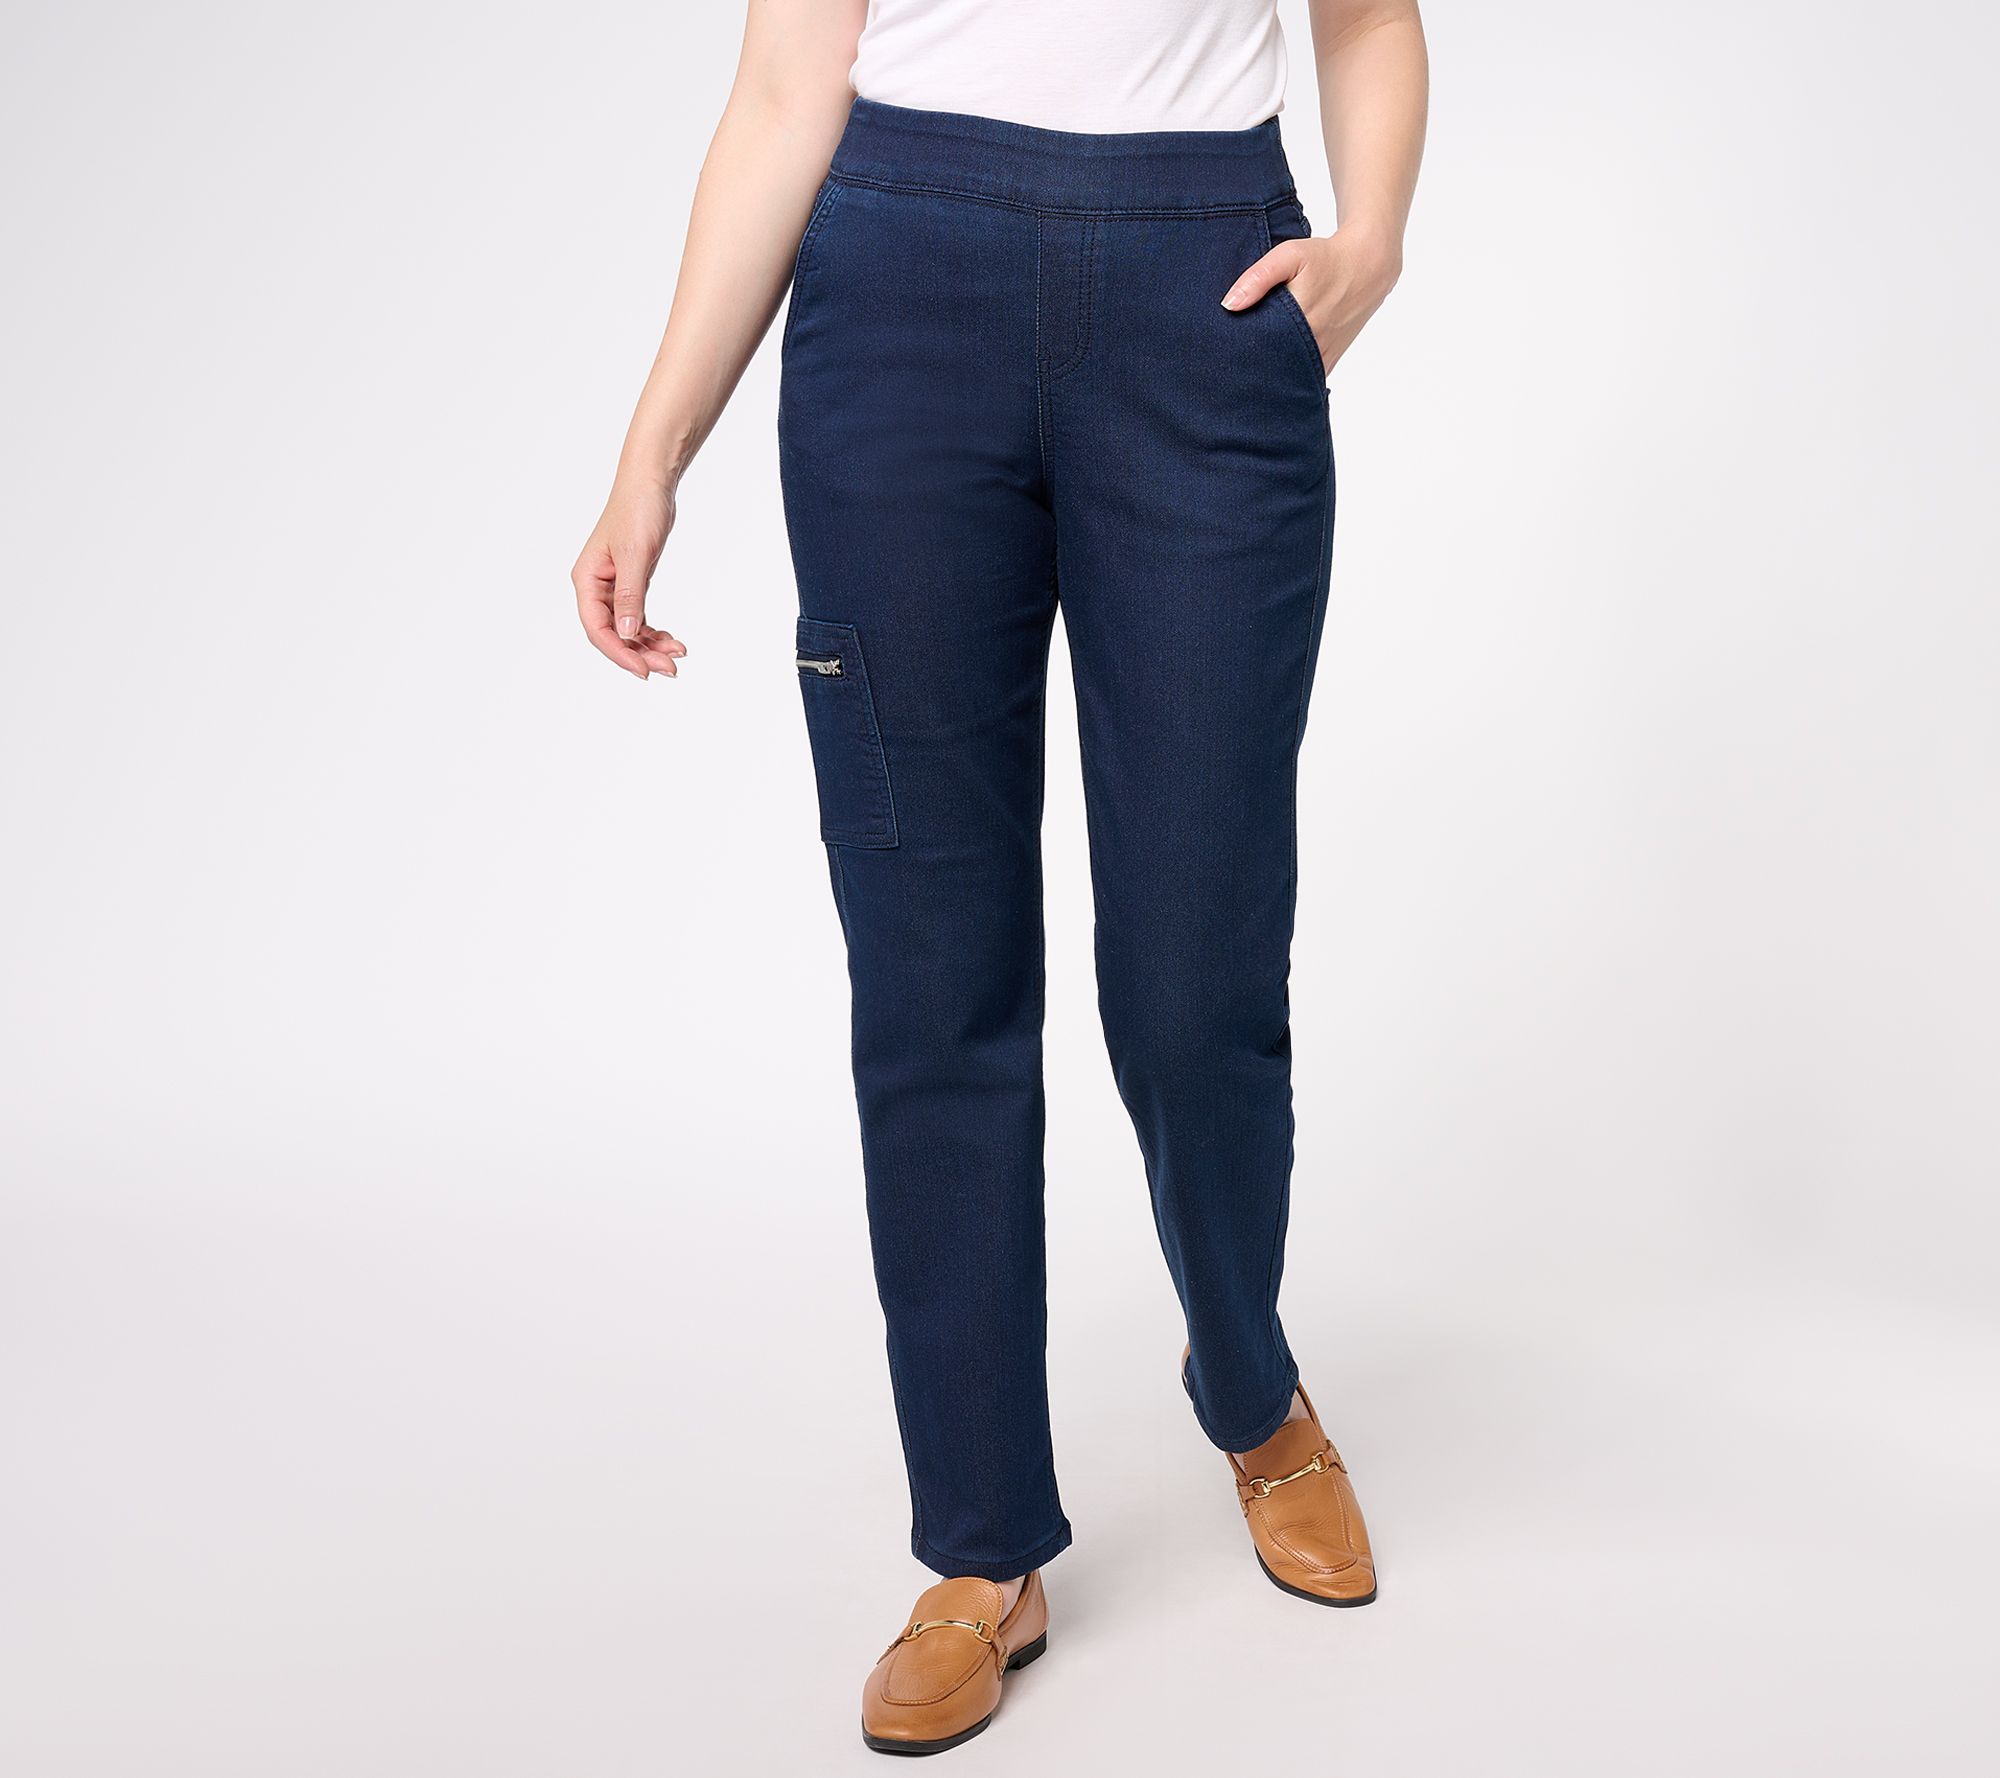 Denim & Co. Original Waist Stretch Regular Side Pocket Pants